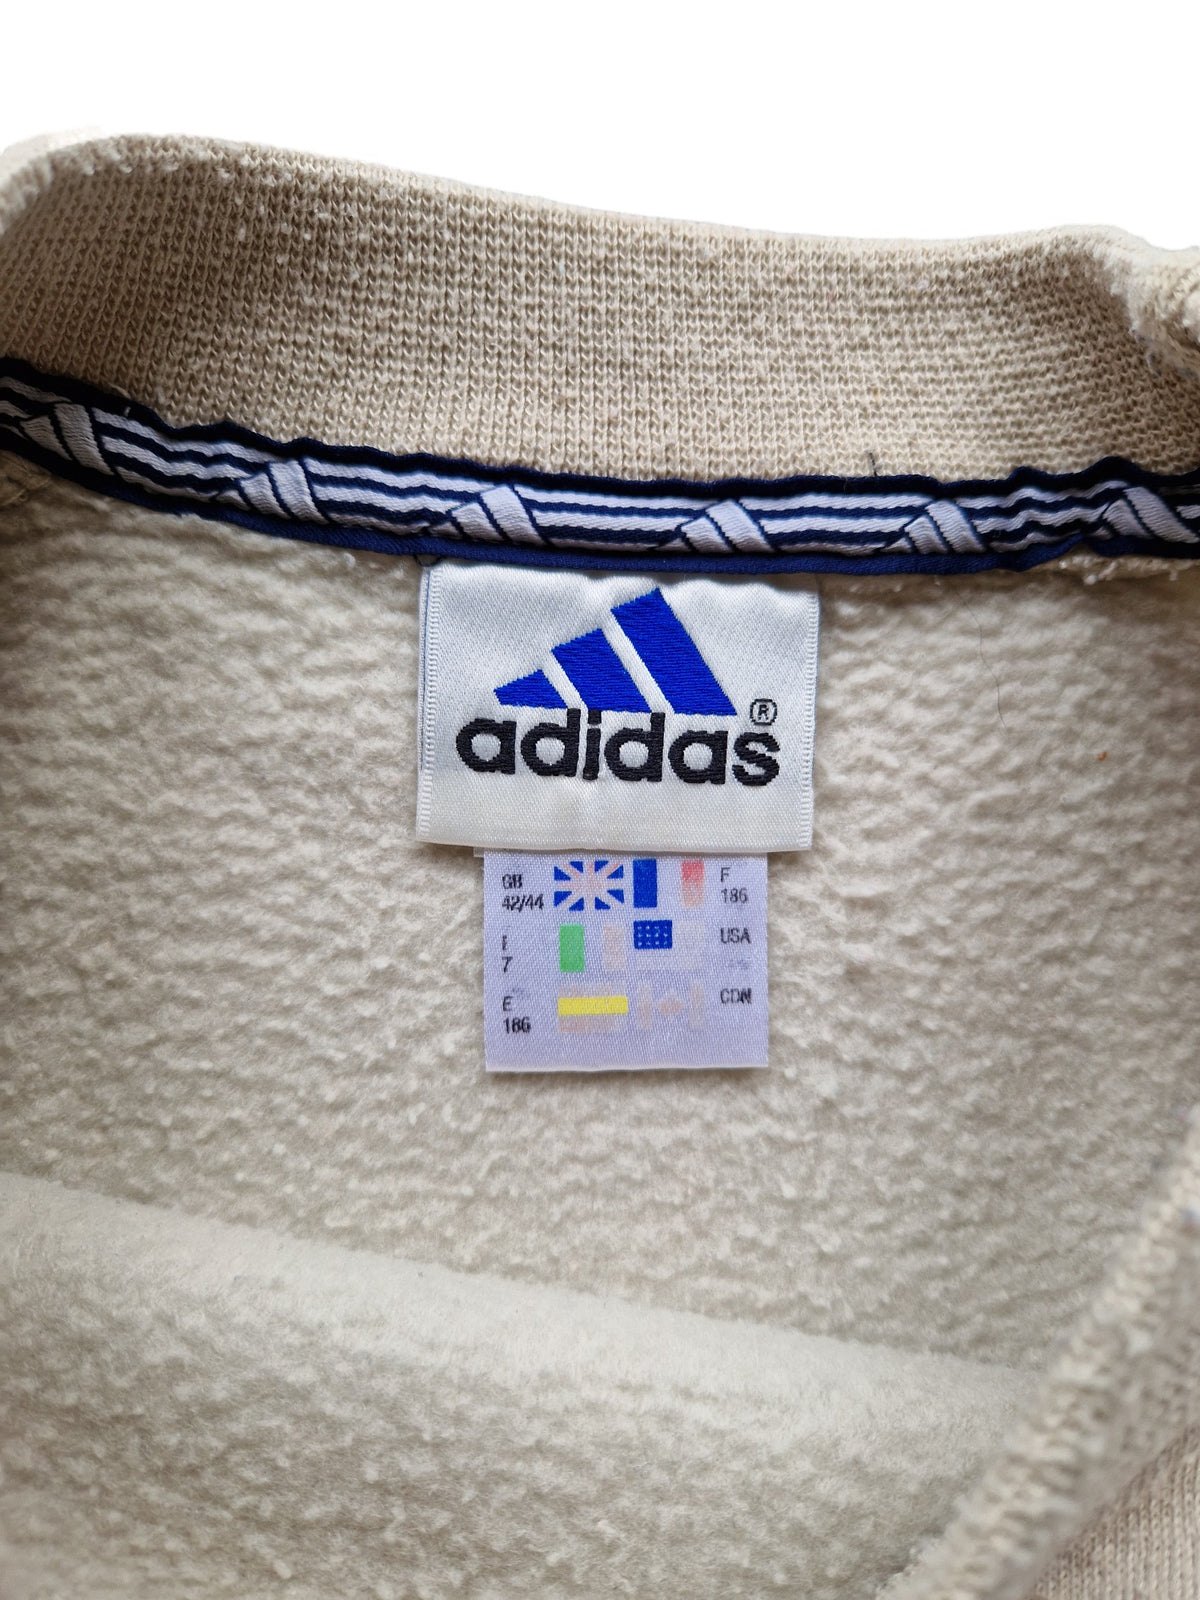 90's Adidas Sweatshirt - Size XL